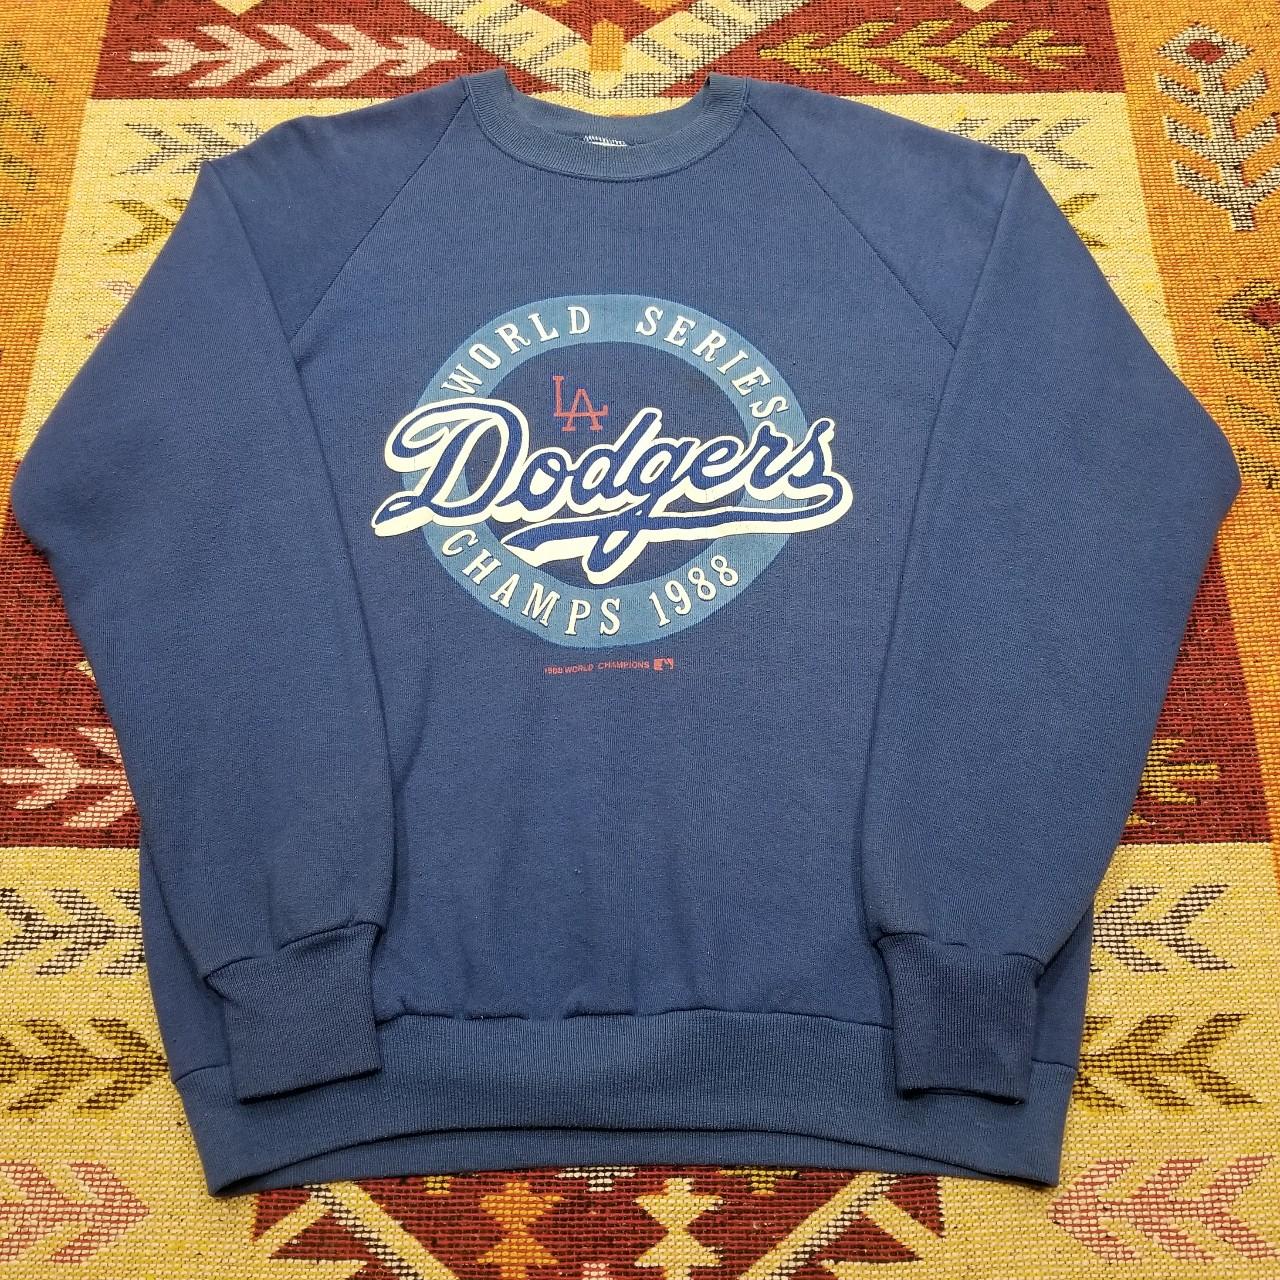 Vintage LA Dodgers 1988 world series champions - Depop